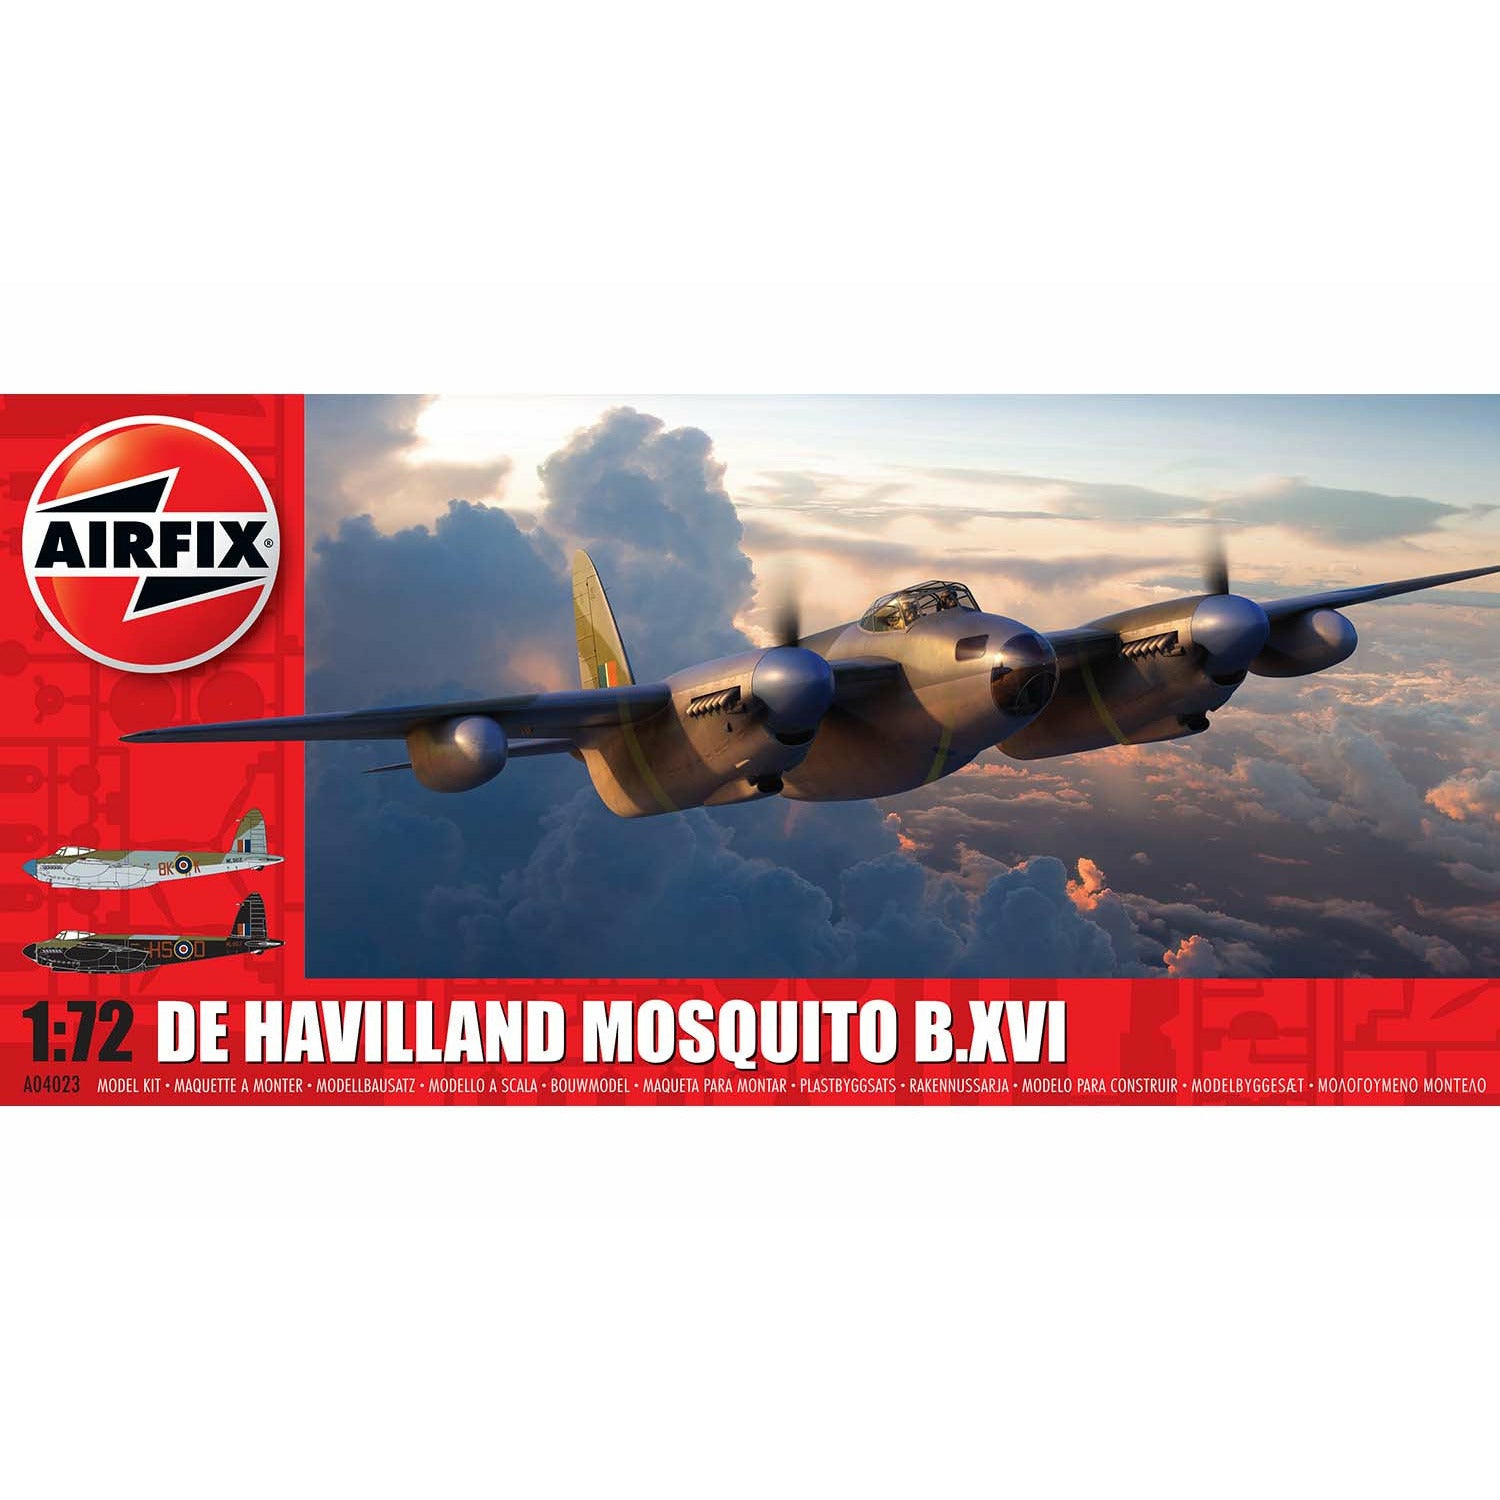 De Havilland Mosquito B.XVI 1/72 #04023 by Airfix